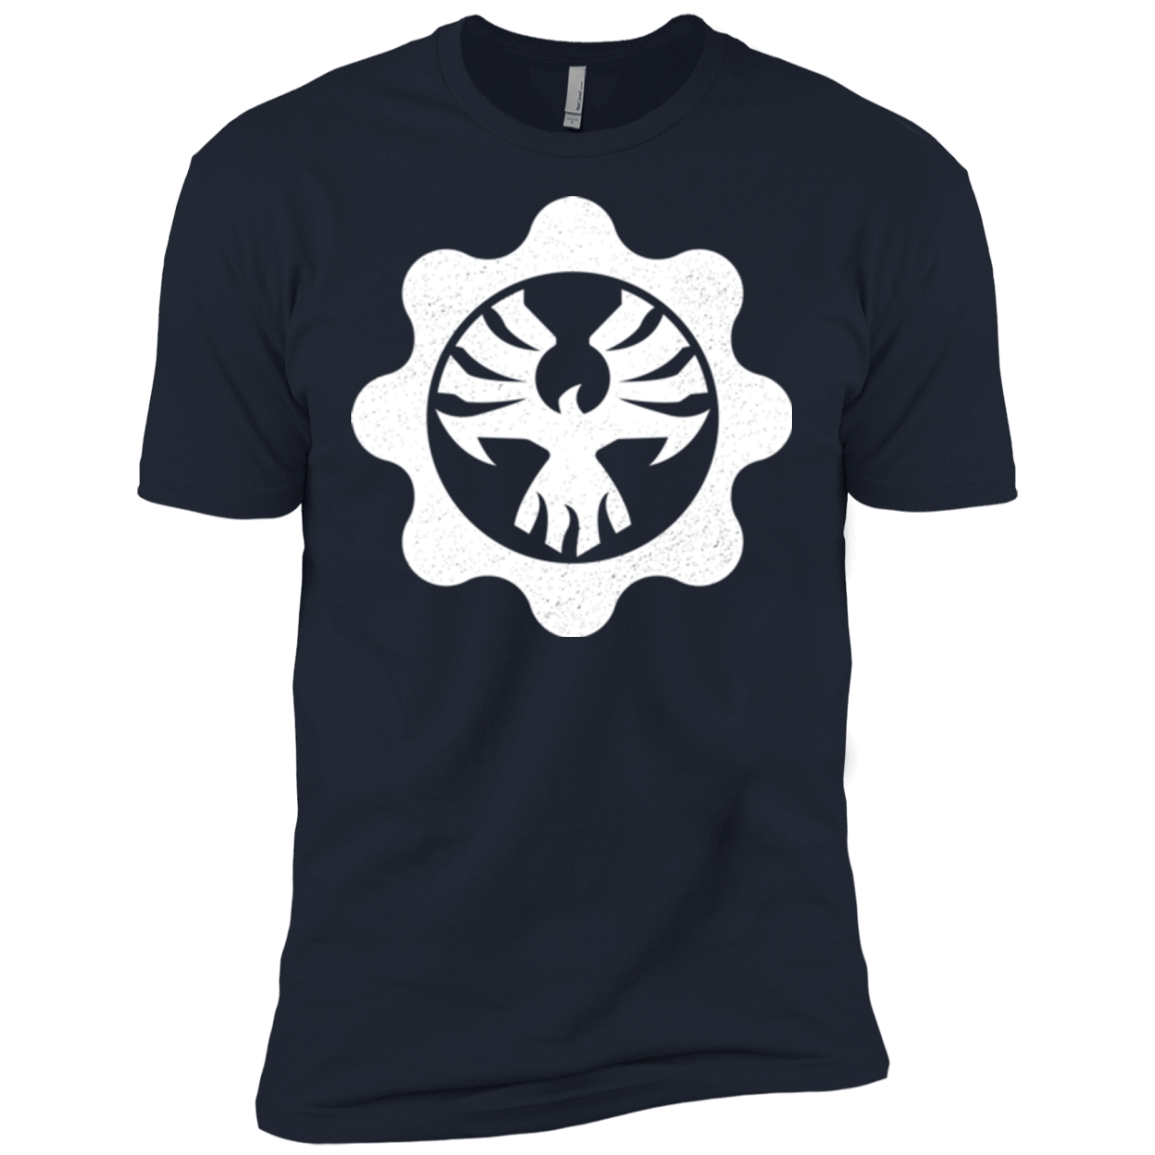 T-Shirts Midnight Navy / X-Small Gears of War 4 Cog Emblem Men's Premium T-Shirt